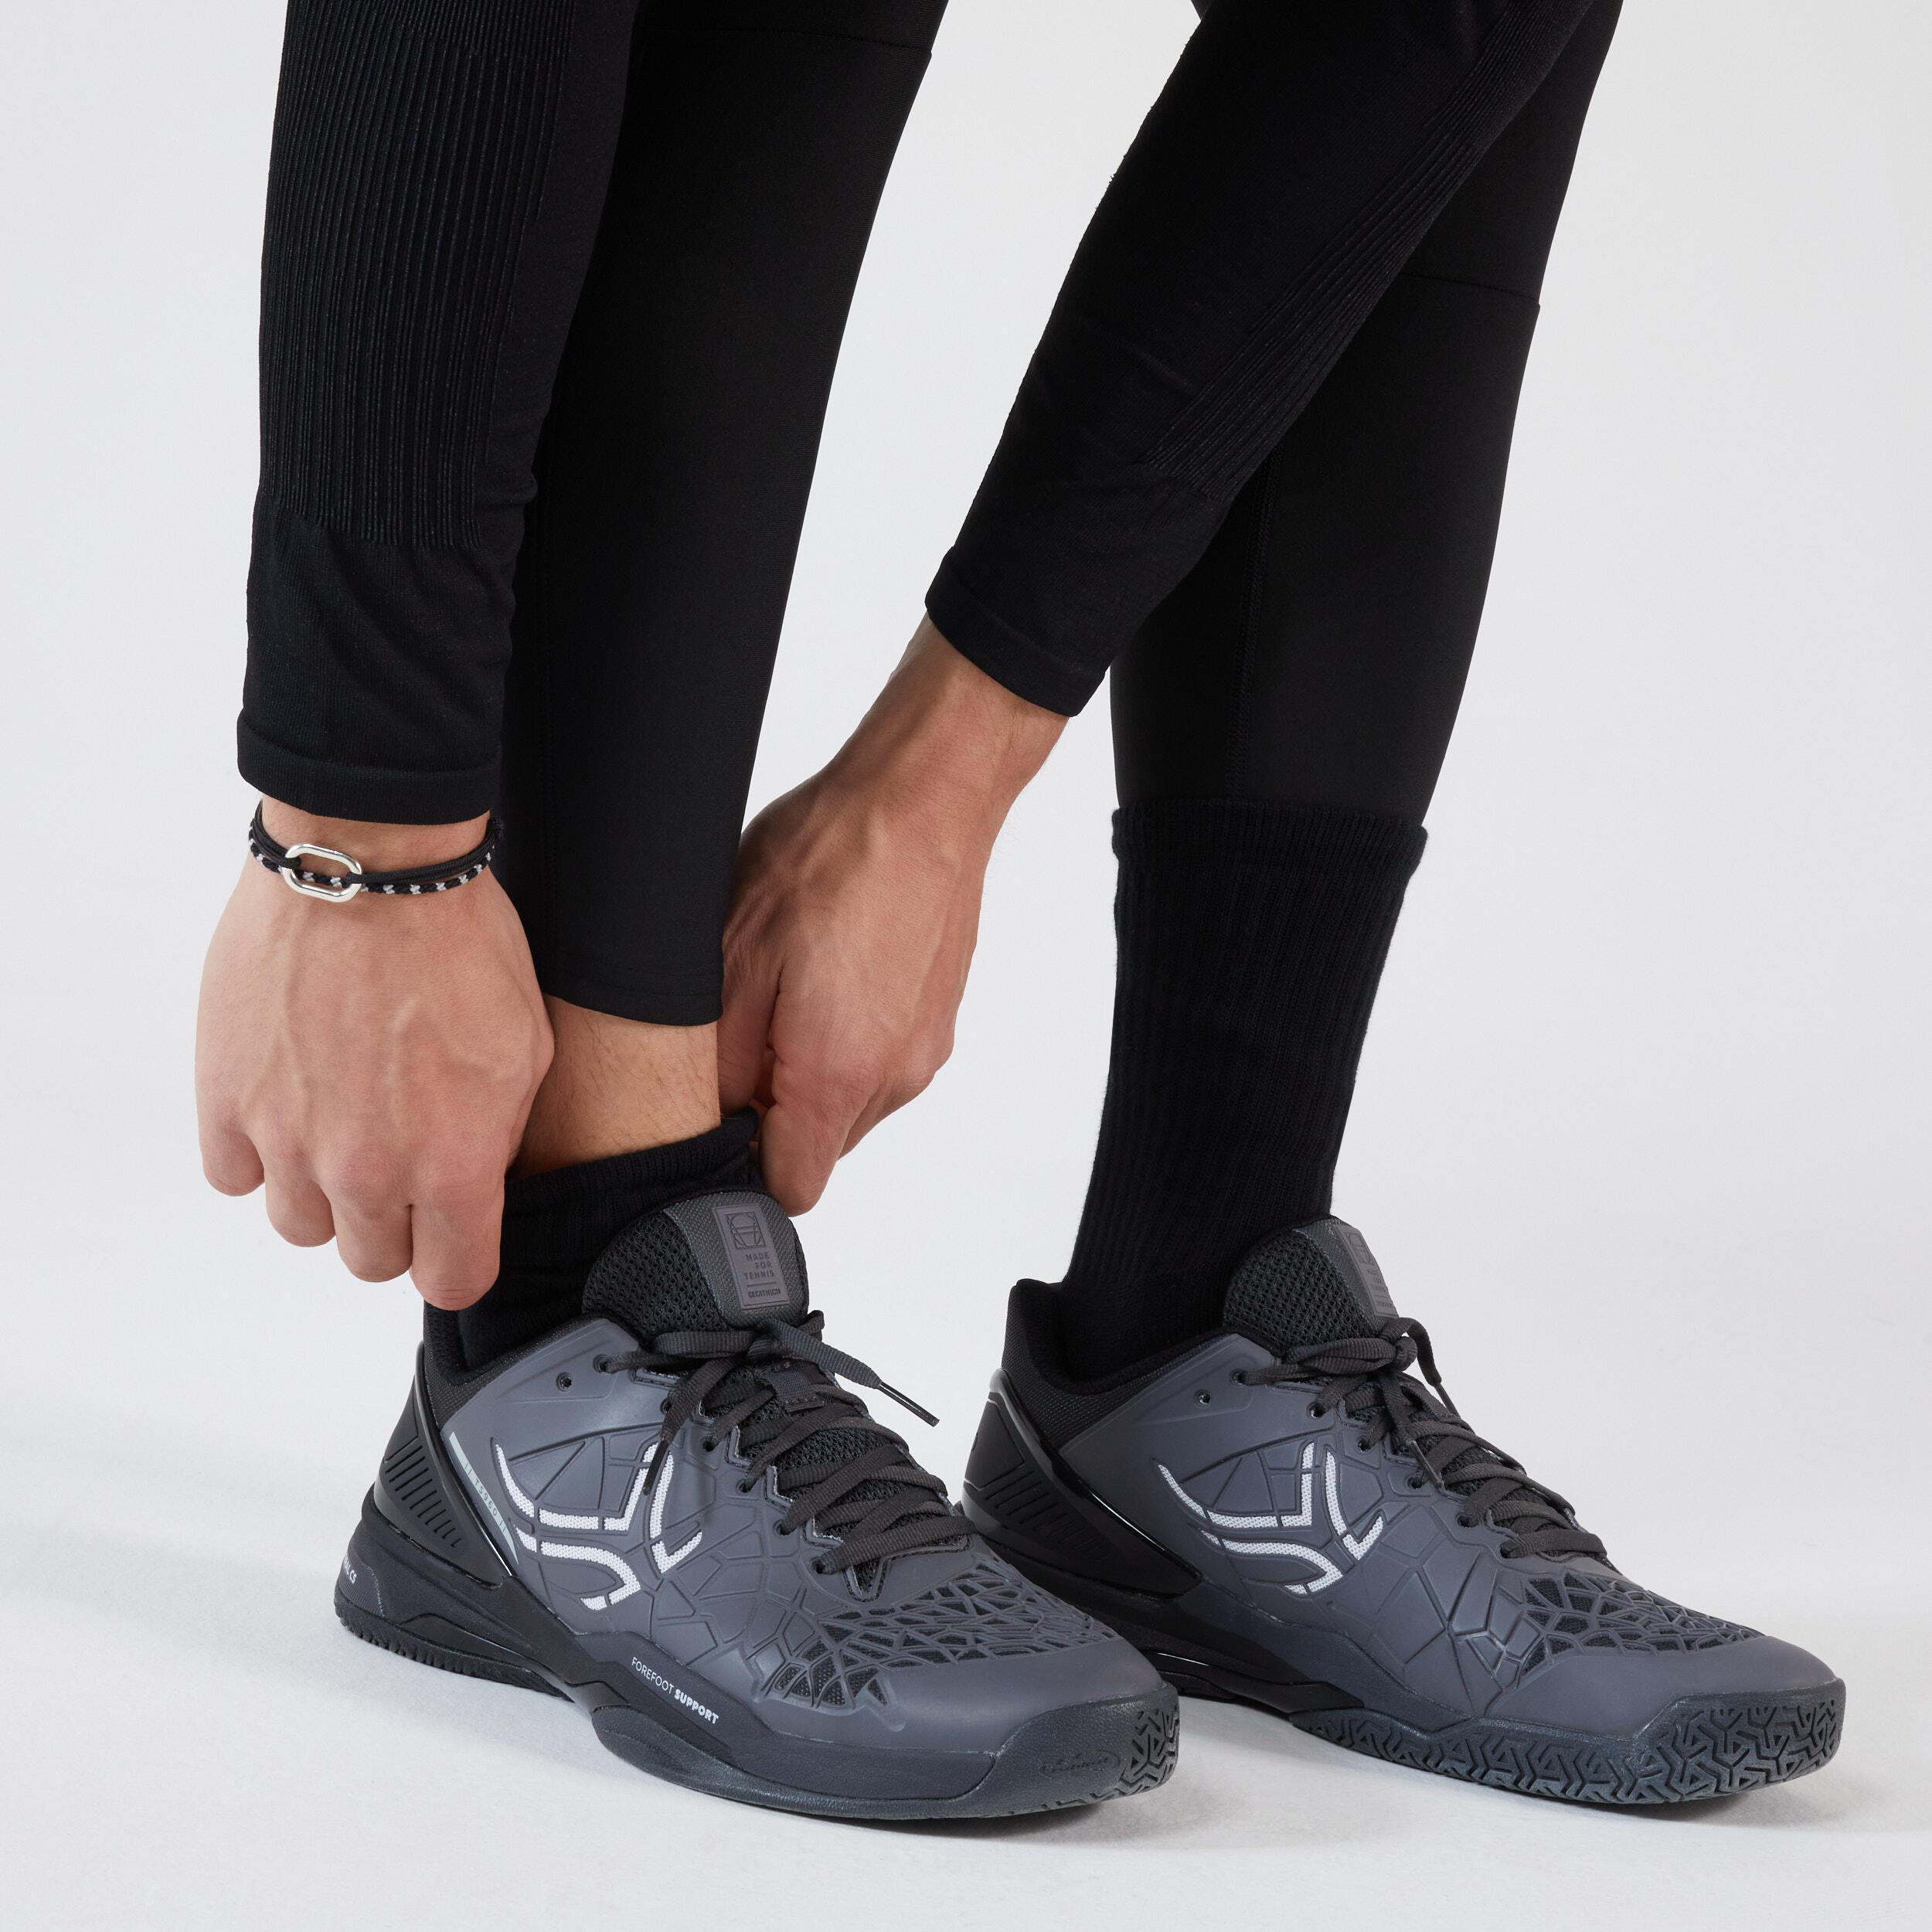 2-in-1 Legging Shorts Thermic - Grey Khaki/Black 7/8